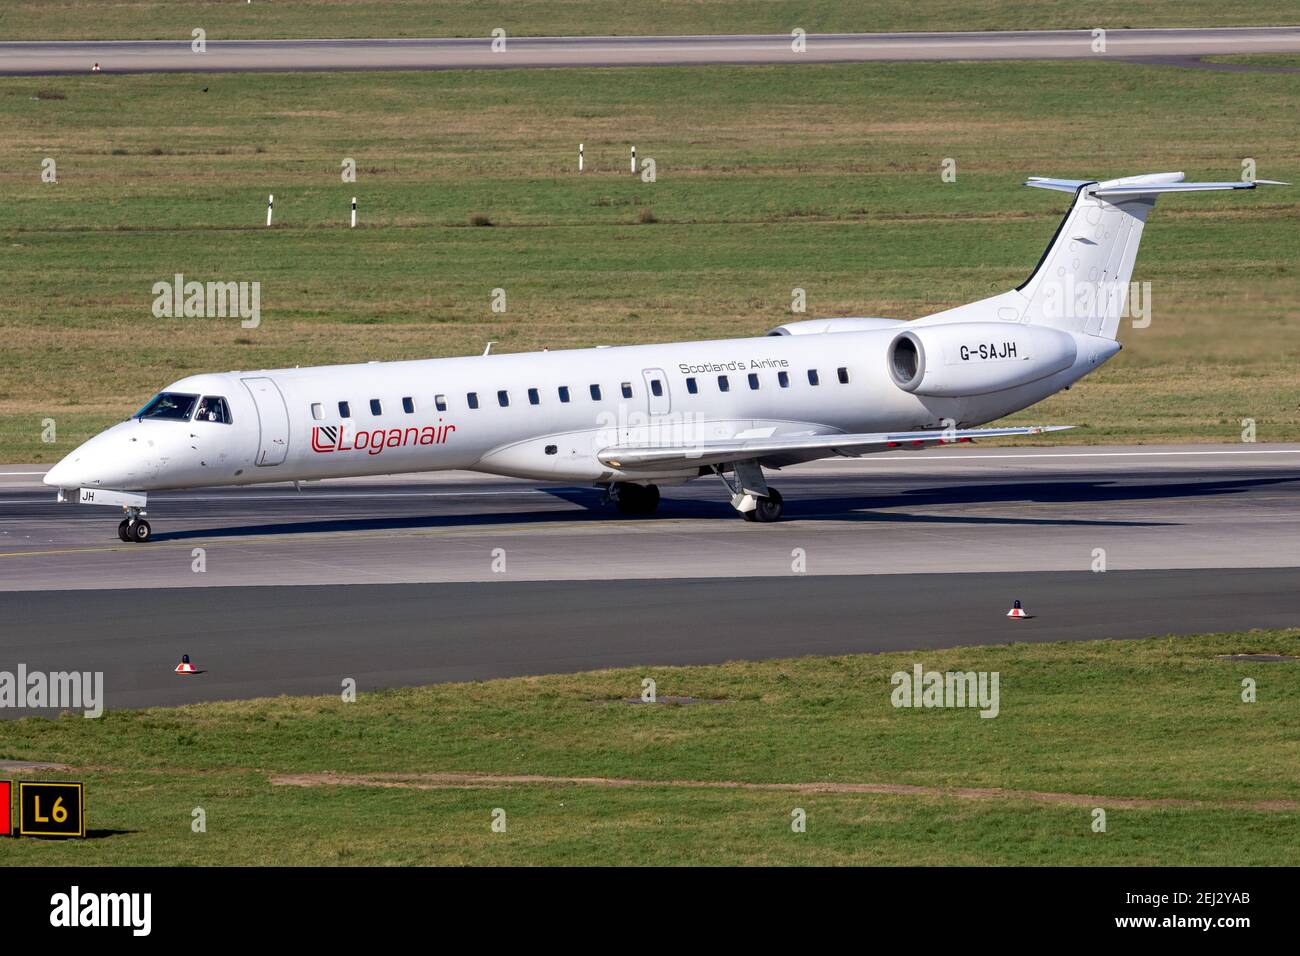 Loganair Embraer ERJ-145EP passenger plane arriving at Dusseldorf Airport. Germany - February 7, 2020 Stock Photo